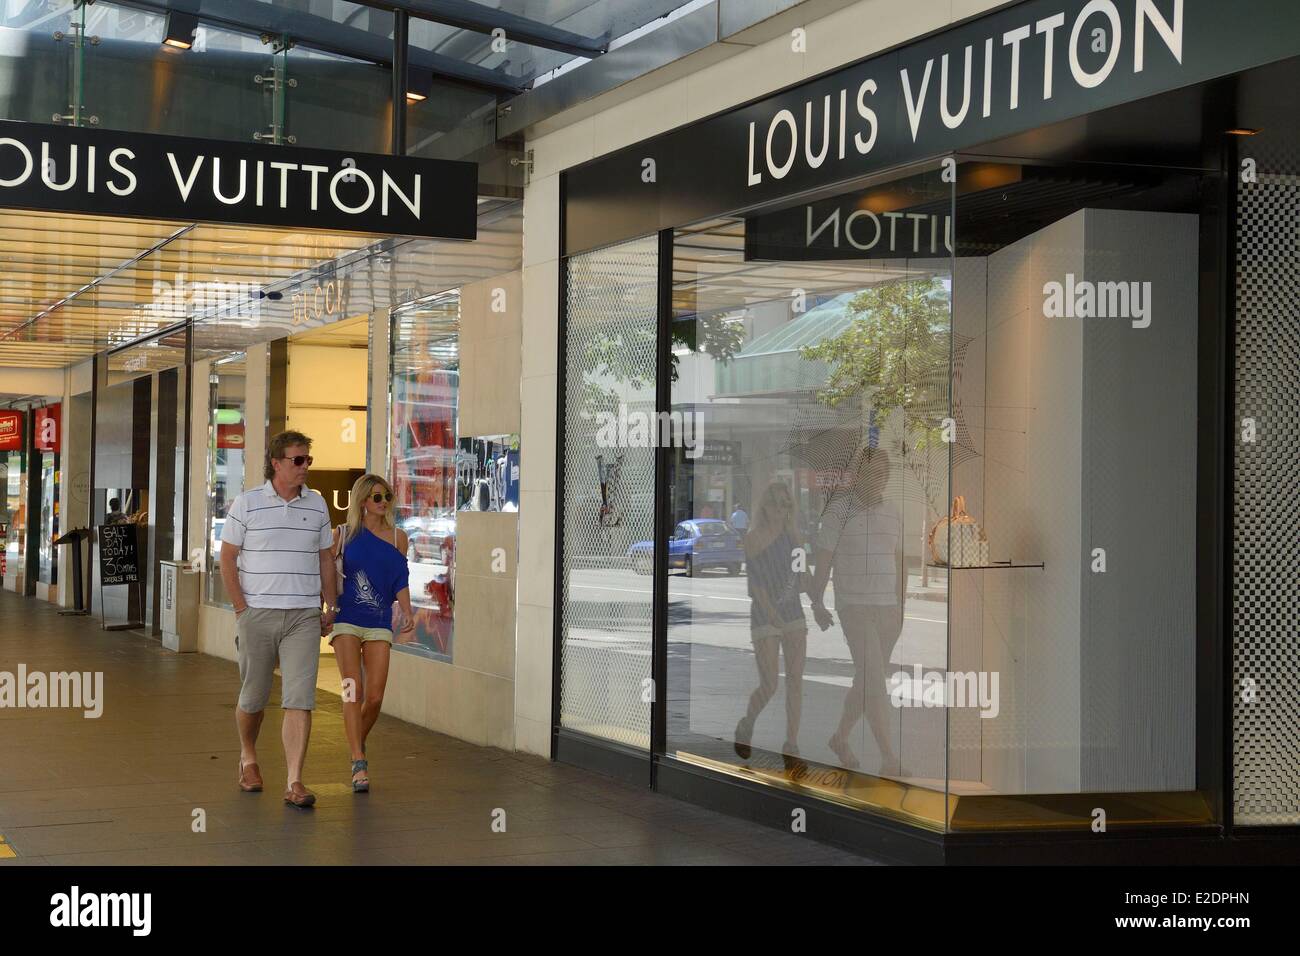 Louis Vuitton Auckland Queen Street Store in Auckland, New Zealand